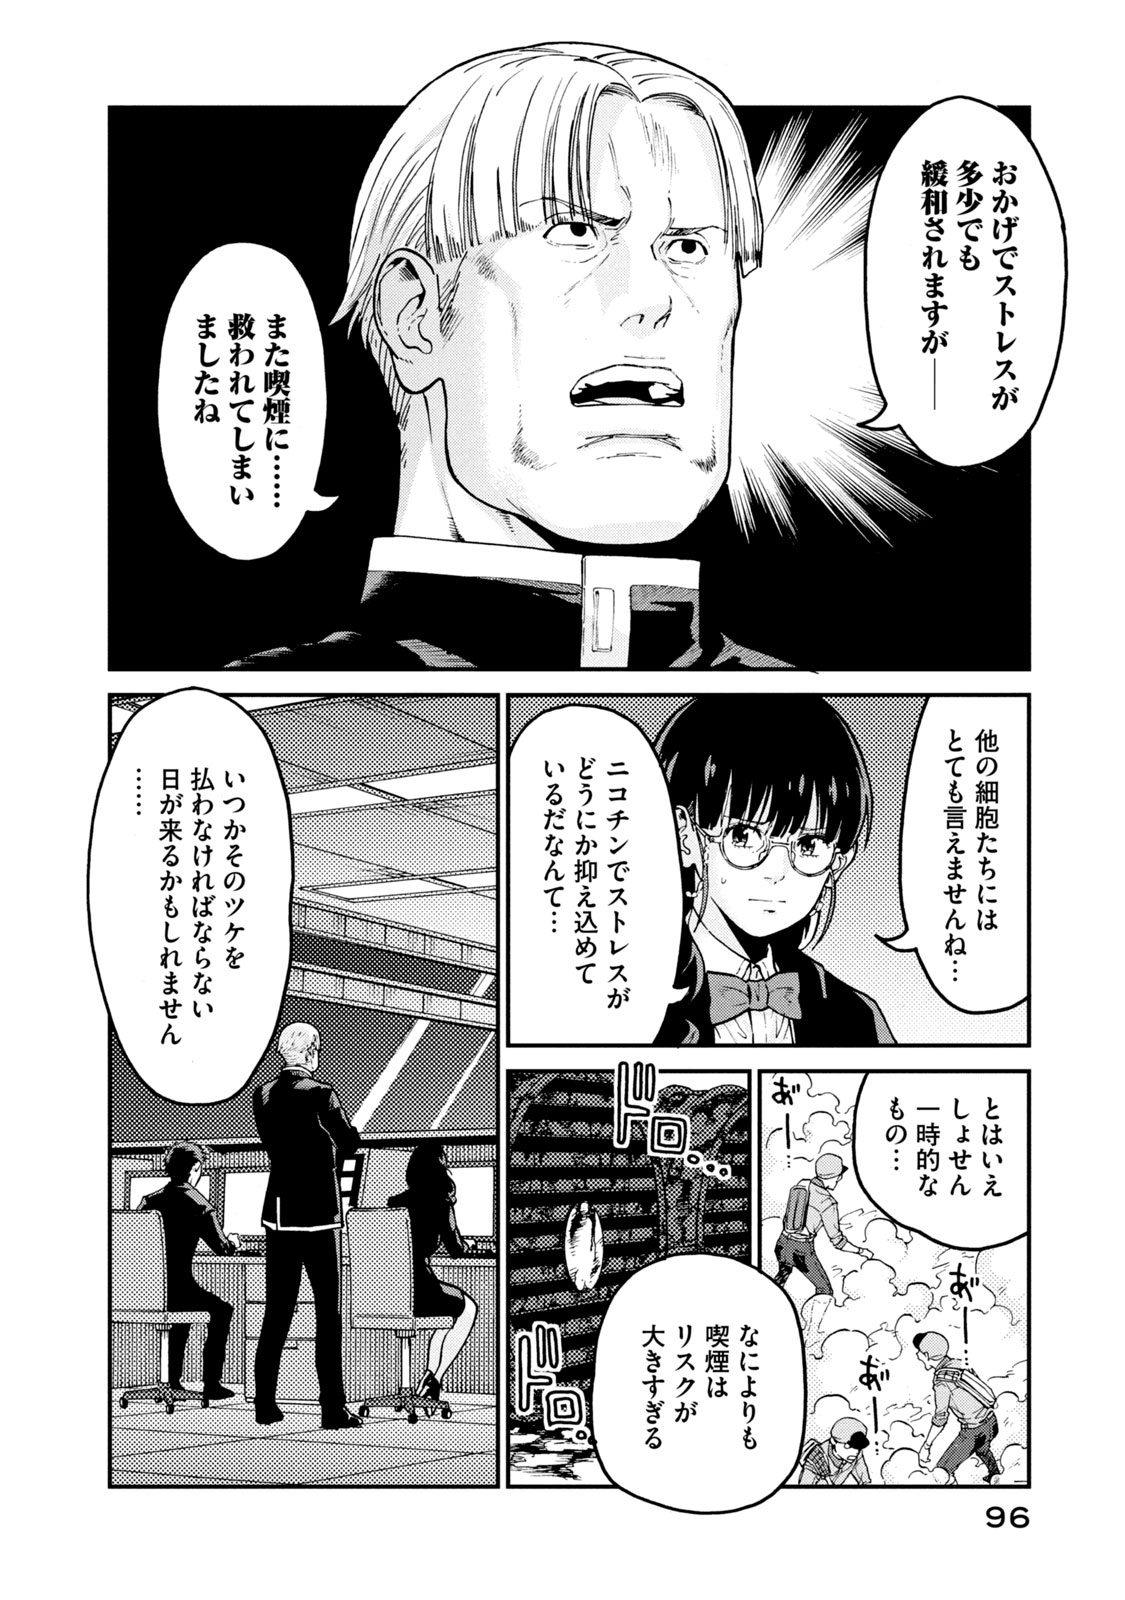 Hataraku Saibou BLACK - Chapter 35 - Page 4